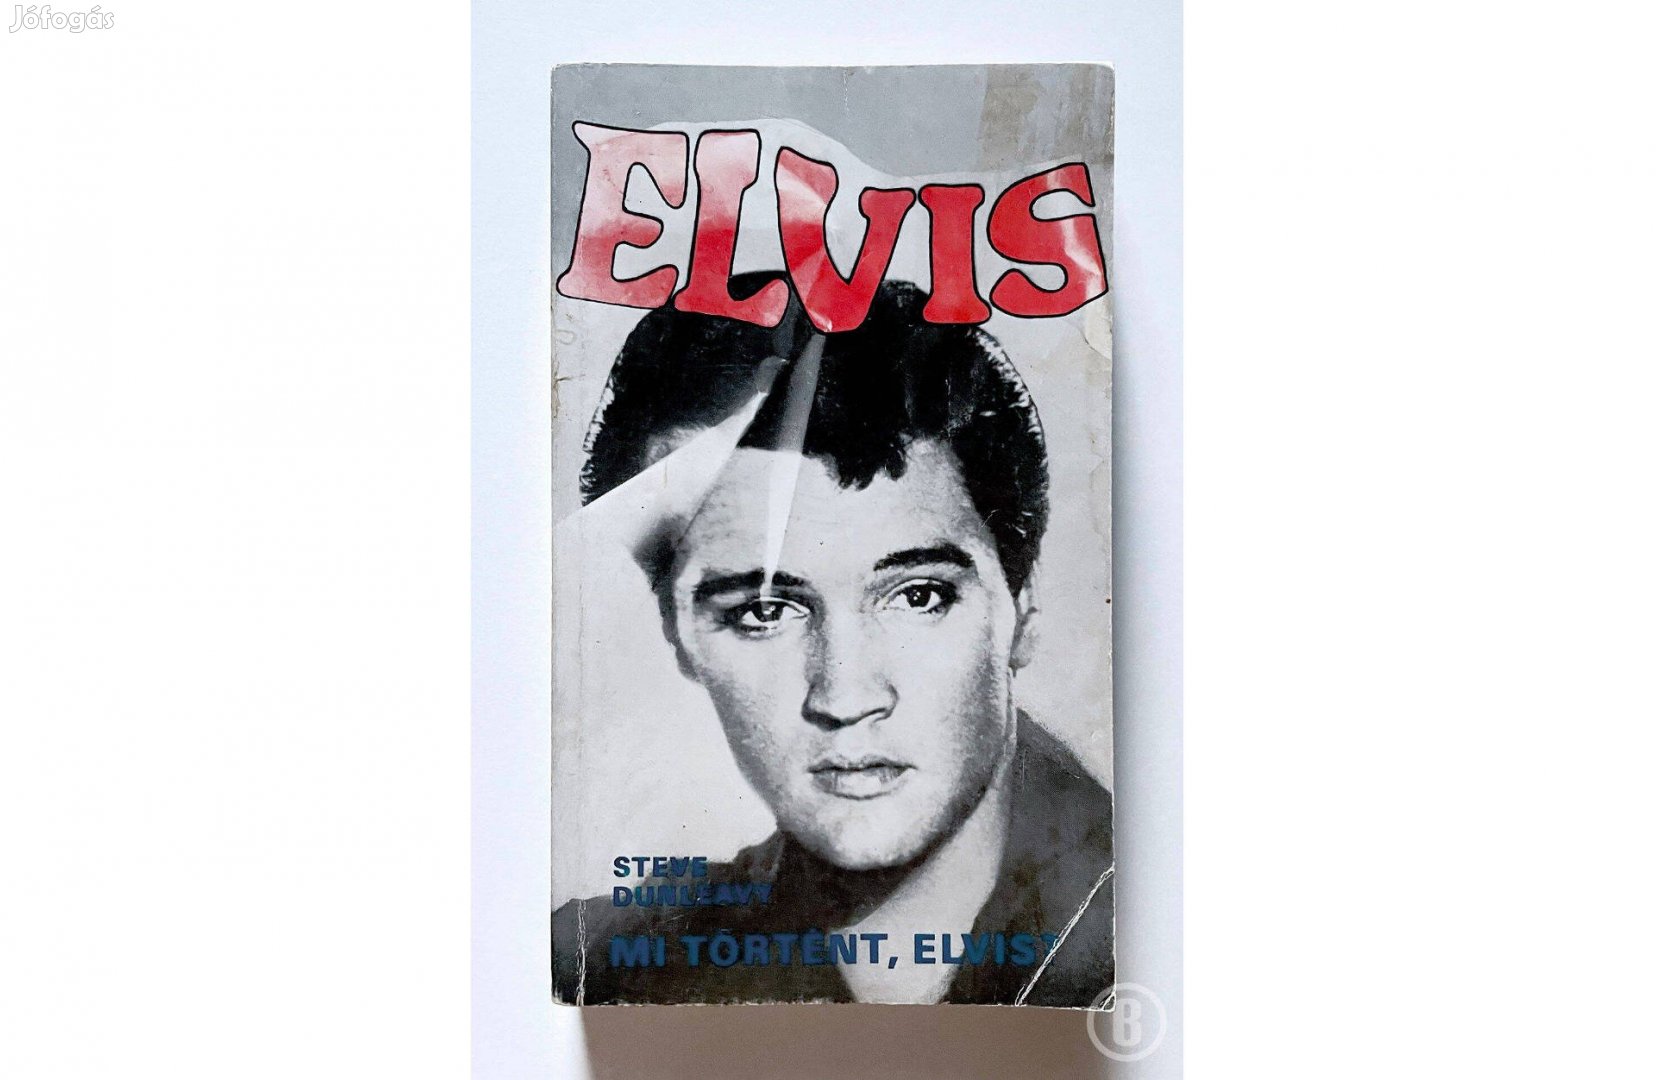 Steve Dunleavy: Mi történt, Elvis?